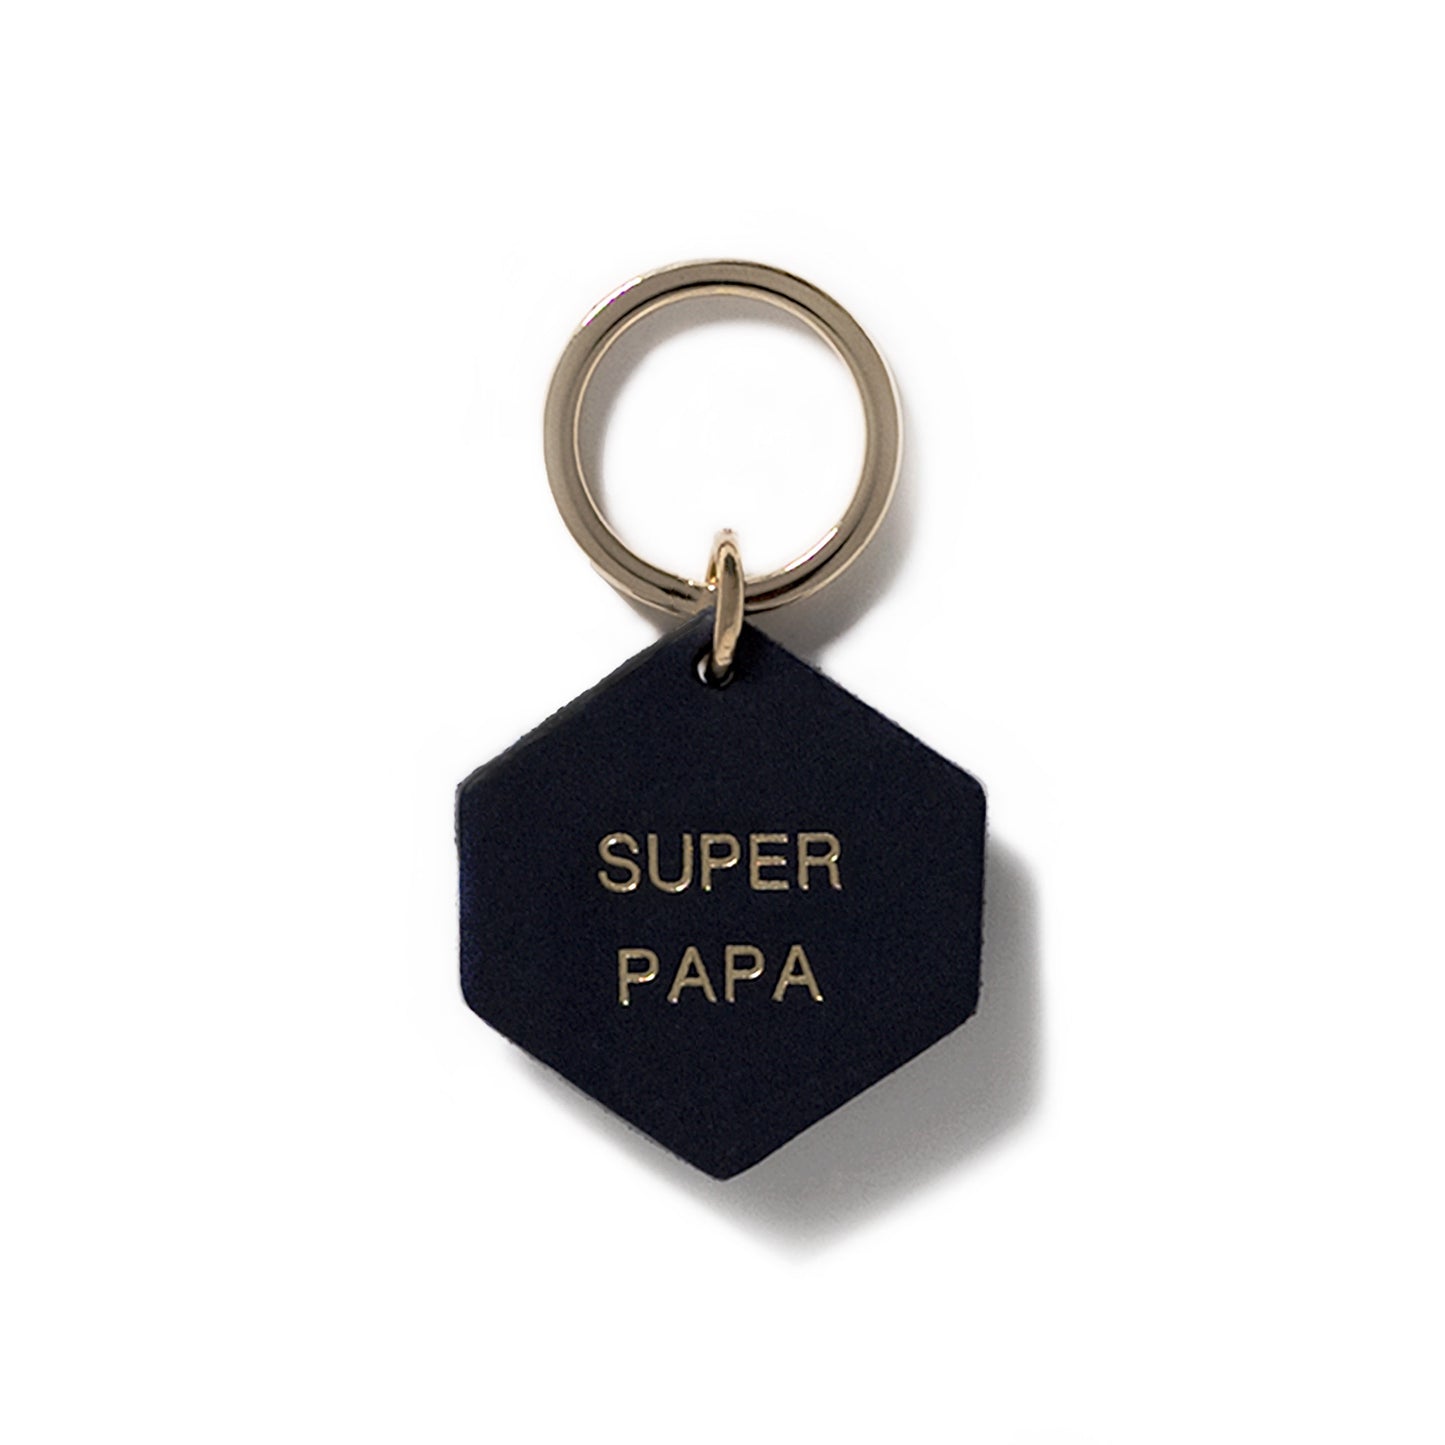 Super Dad key ring